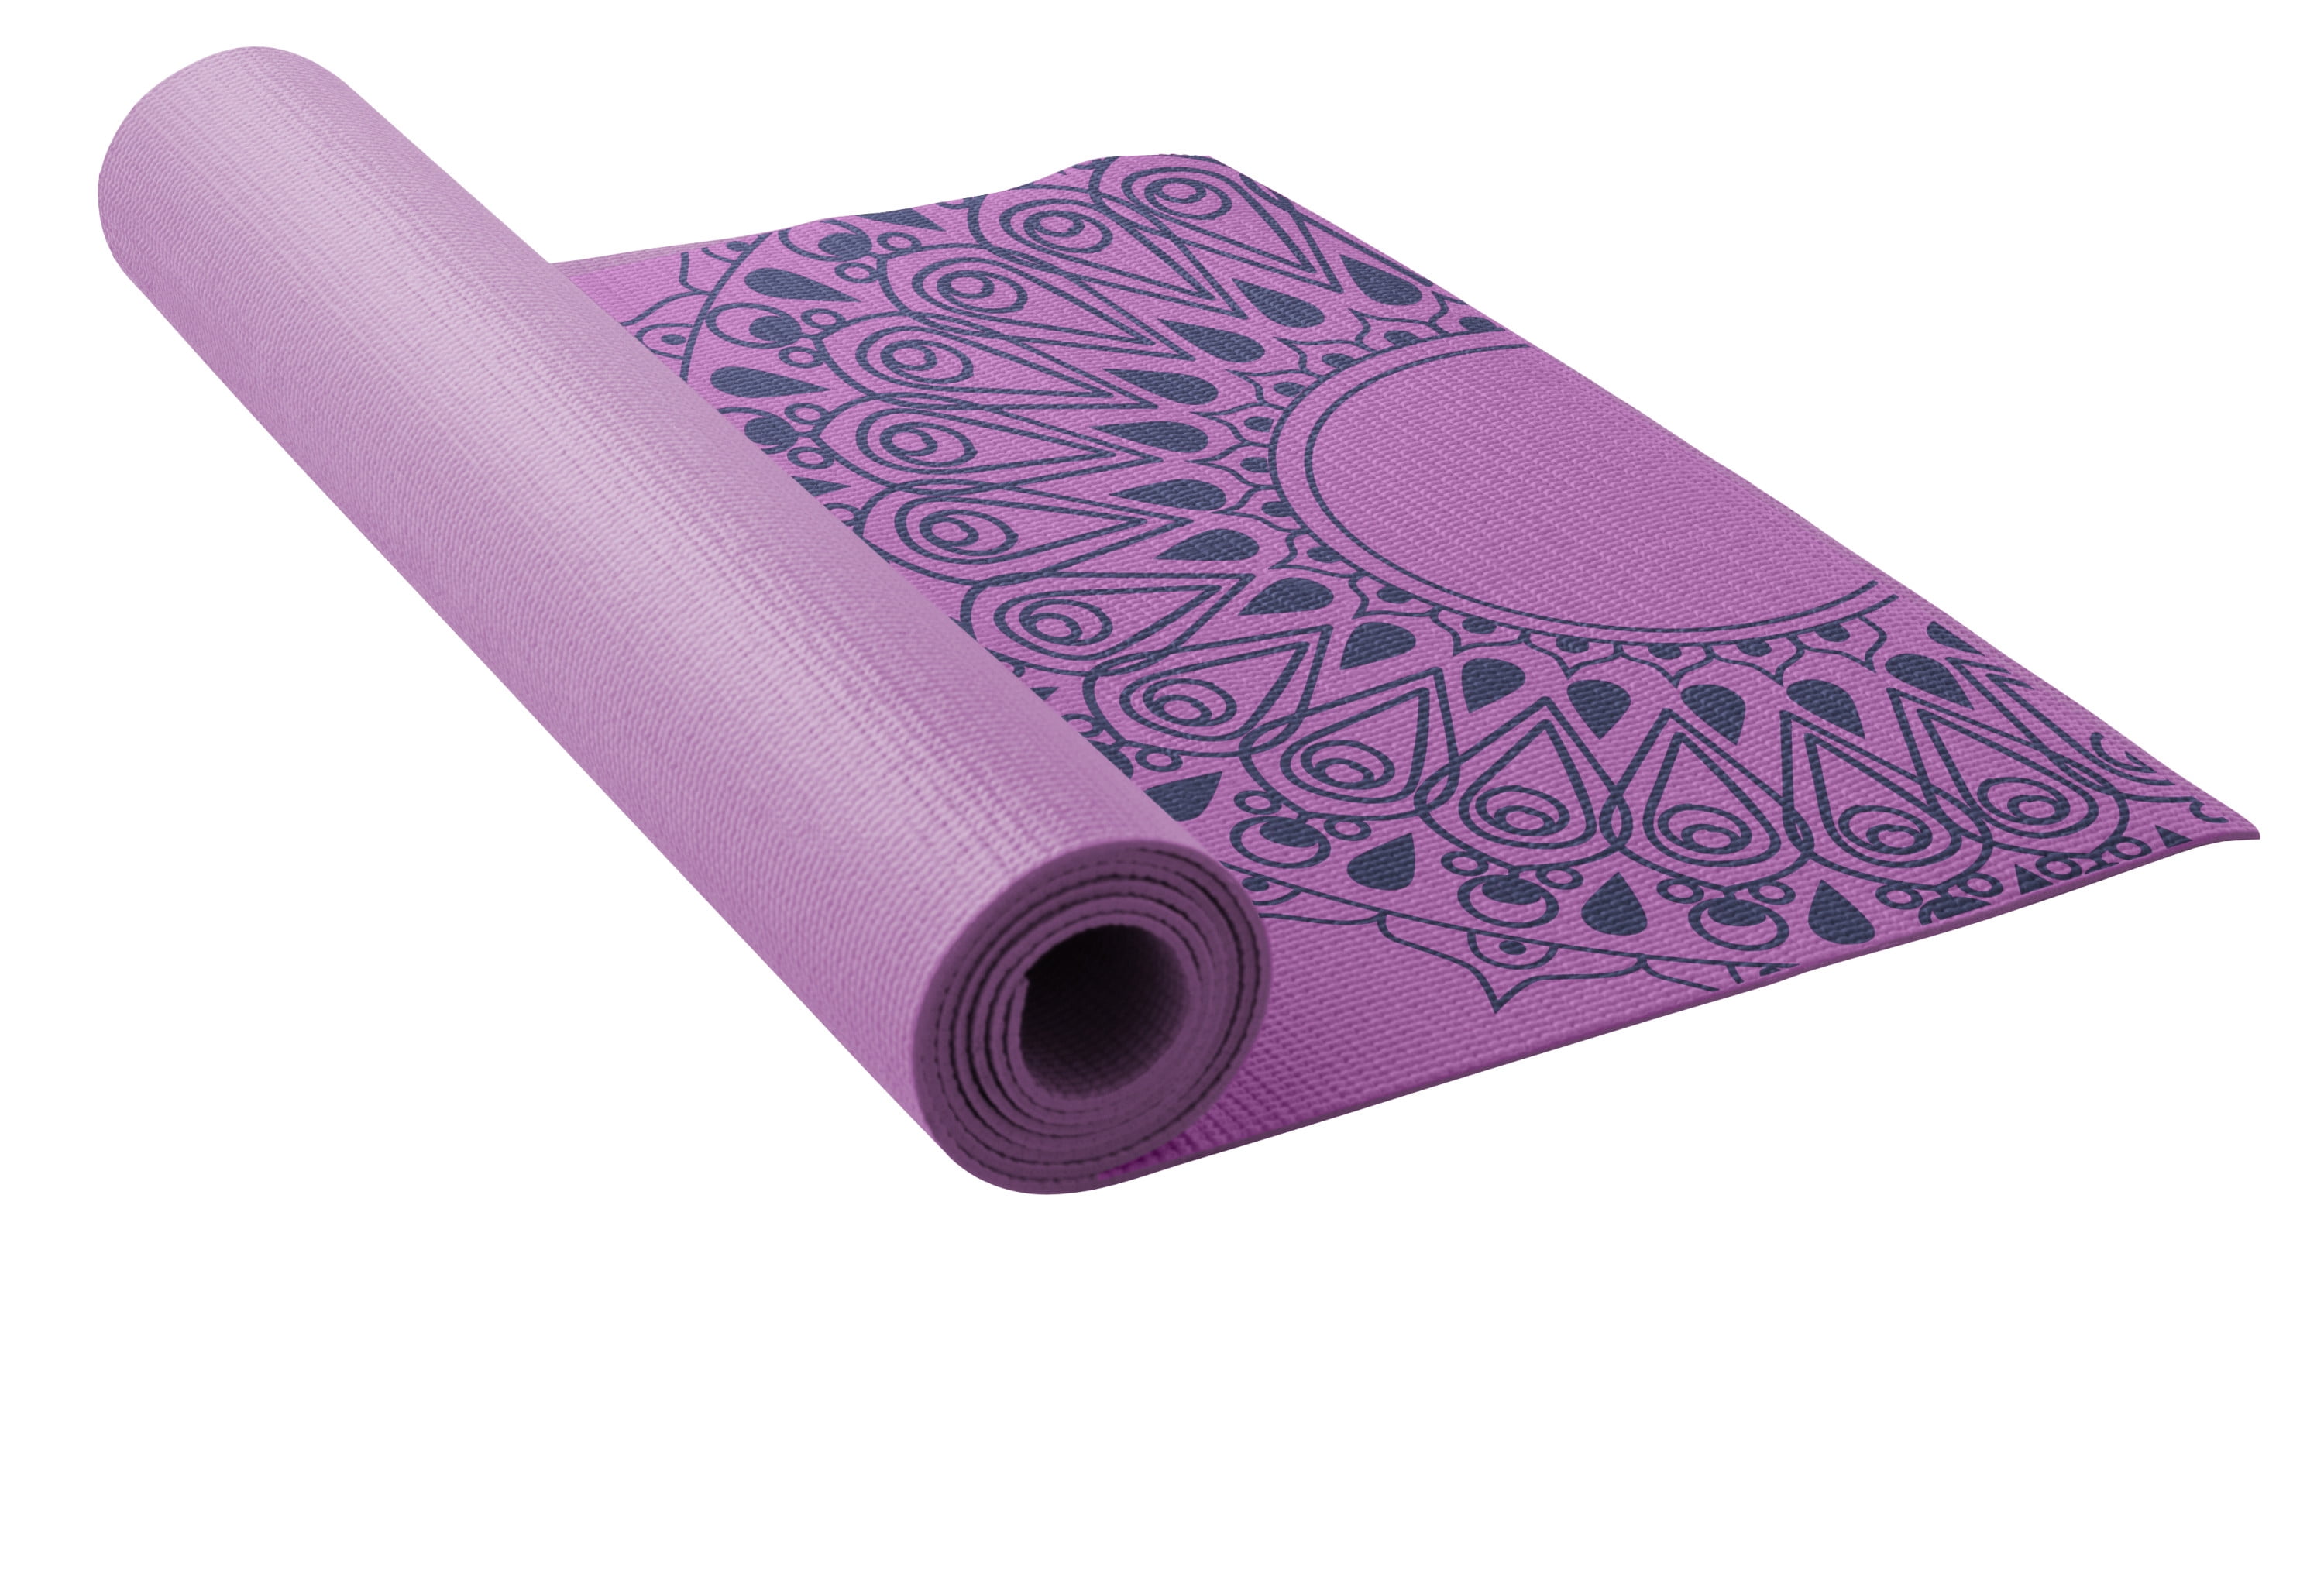 Lotus 3mm PVC Yoga Mat with Non-Slip Surface, Blue Chain Print 